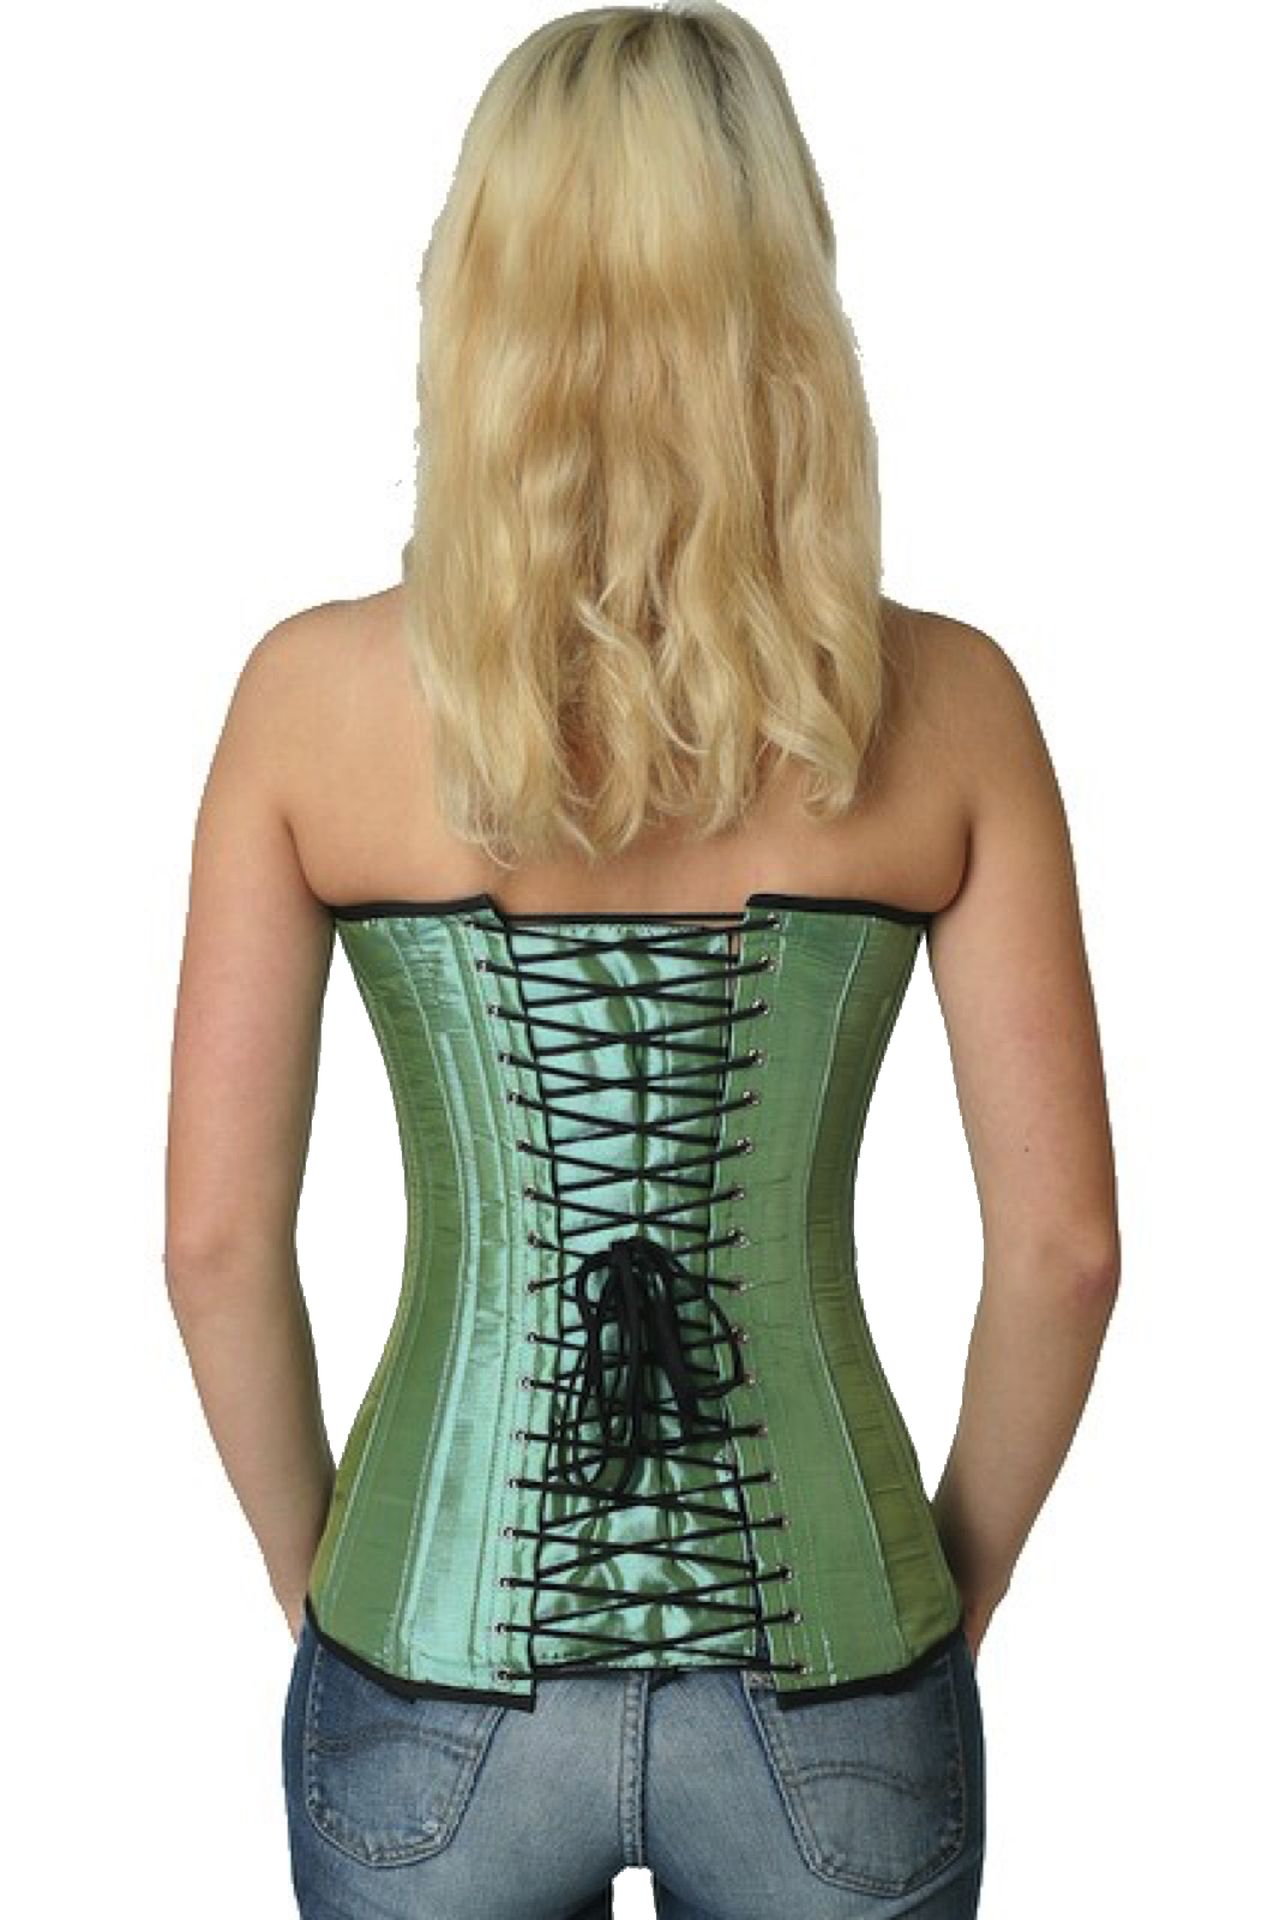 Corse verde claro raso sobre pecho corset sy15